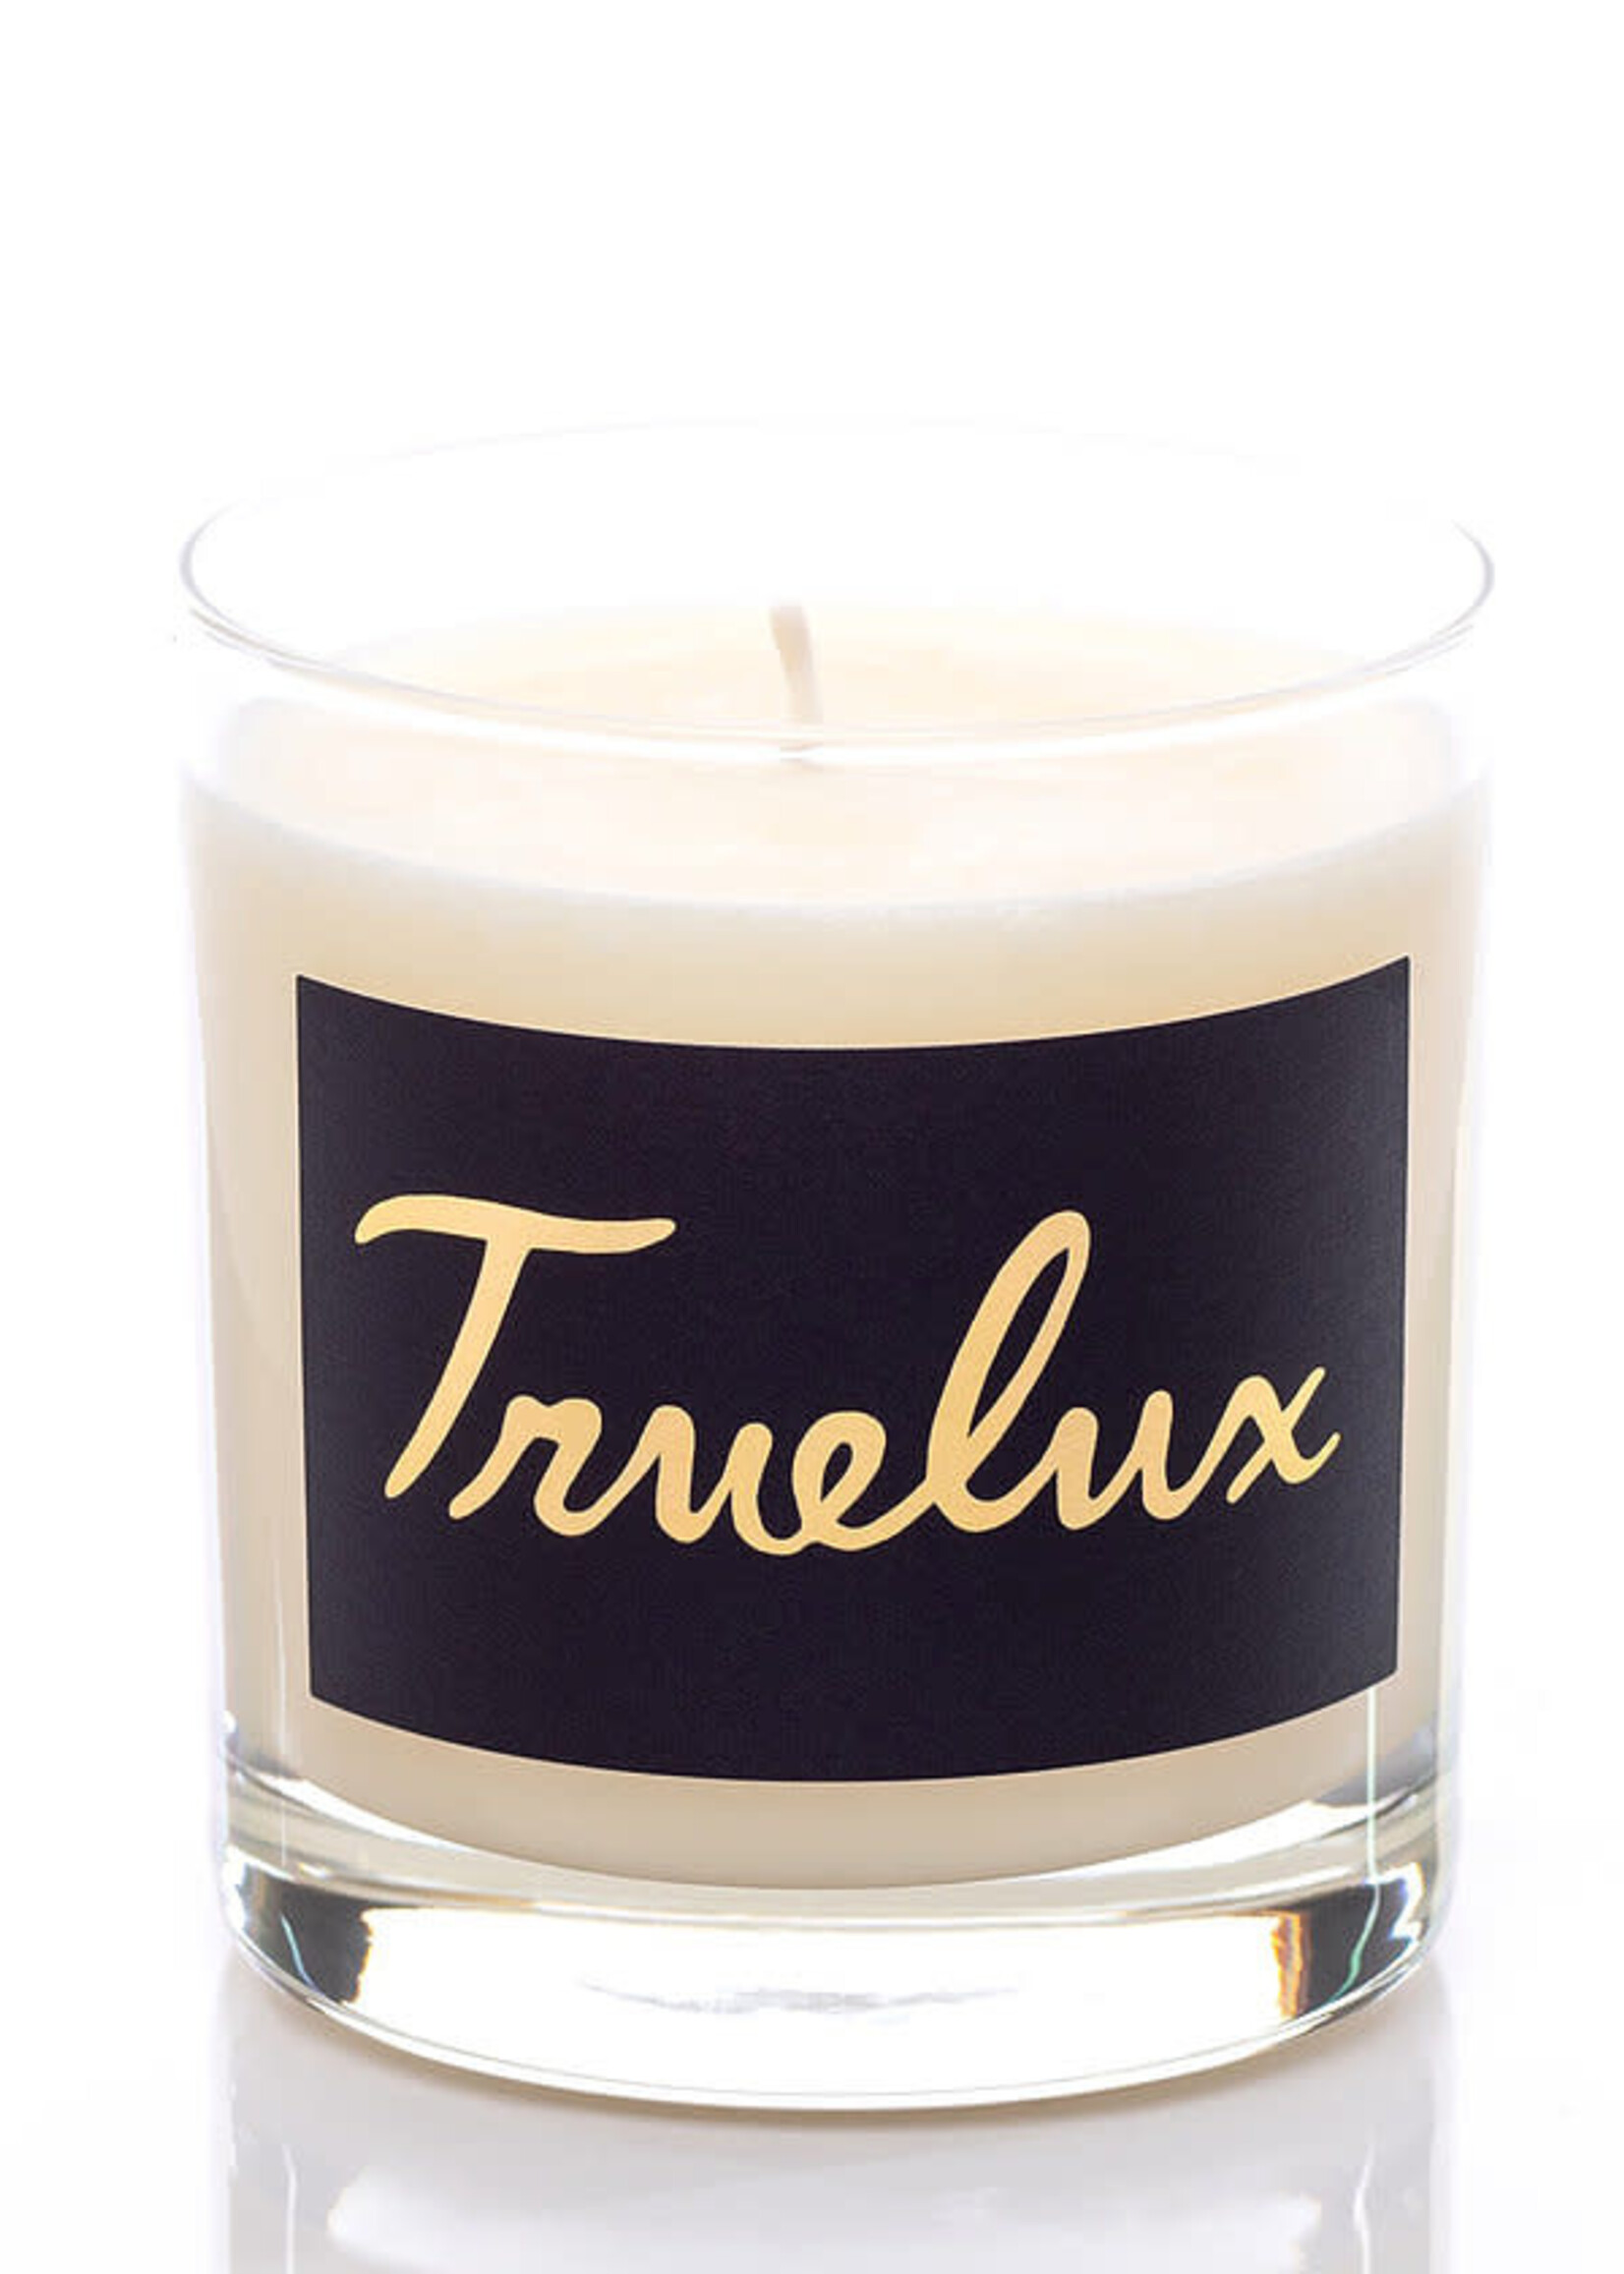 Truelux Truelux Lotion Candles